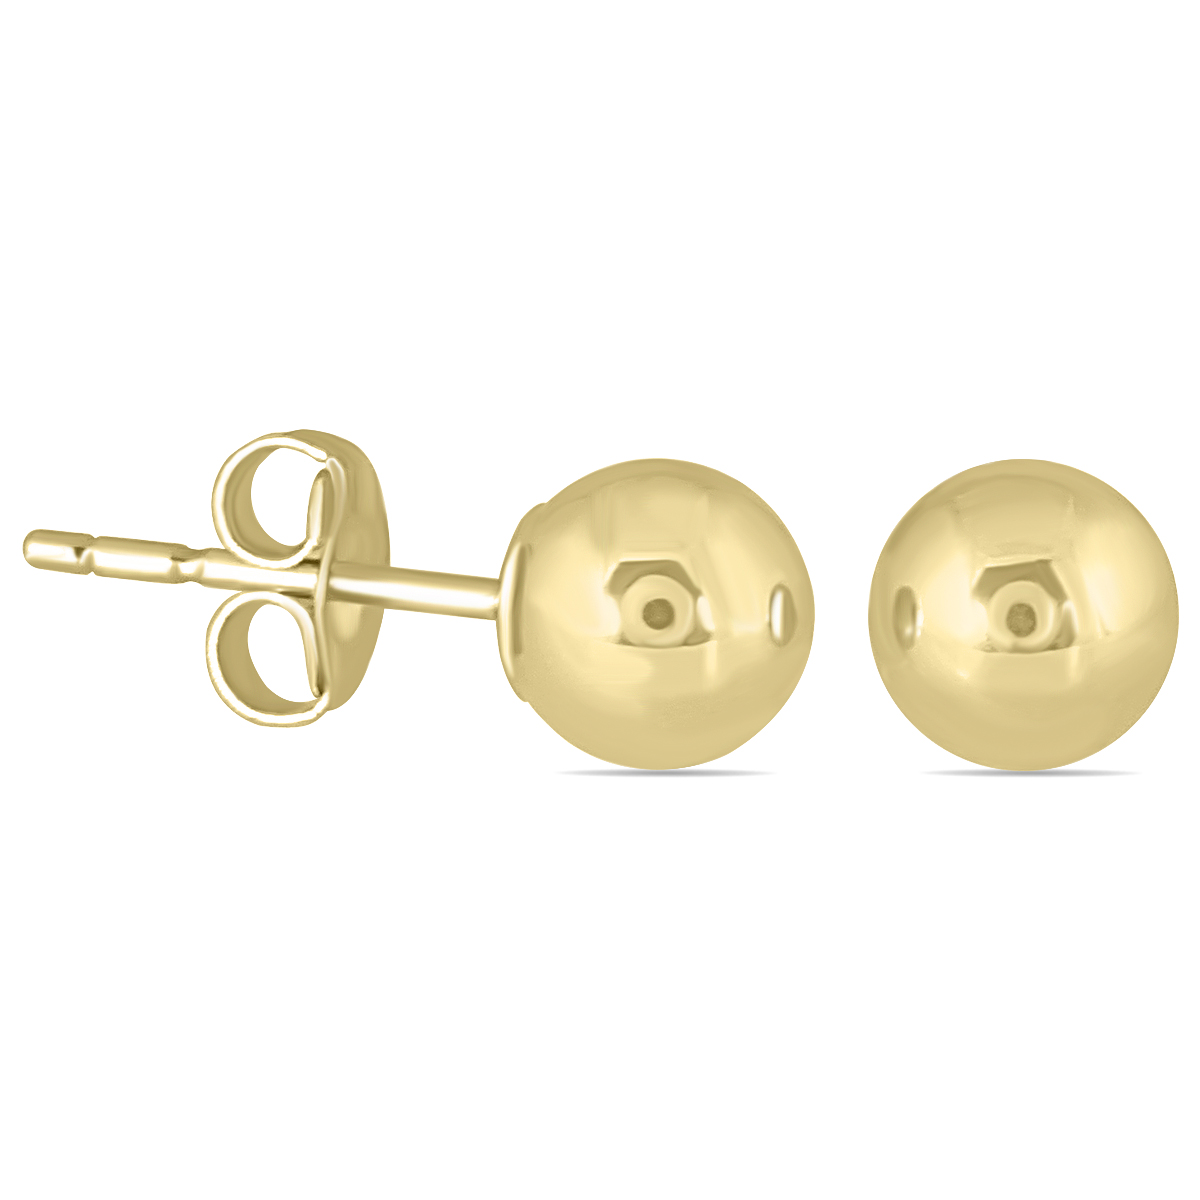 10K Yellow Gold 4mm Ball Stud Earrings